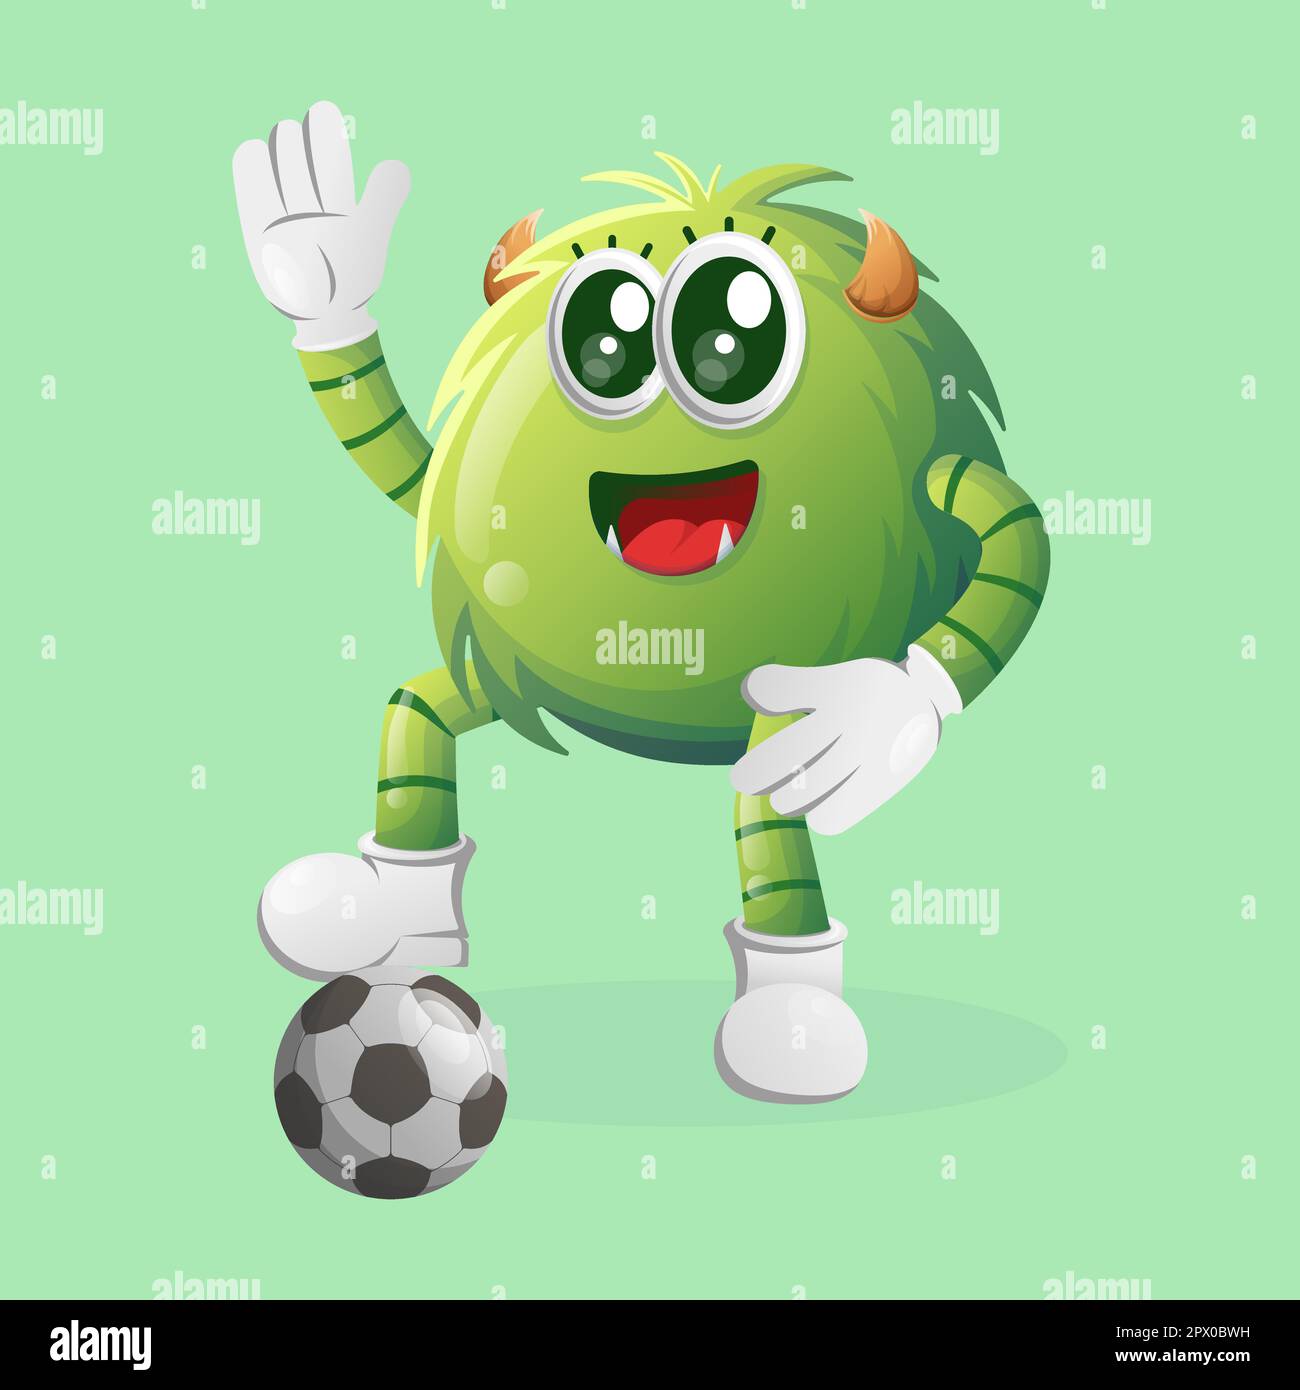 pegatinas de fútbol Imagen Vector de stock - Alamy